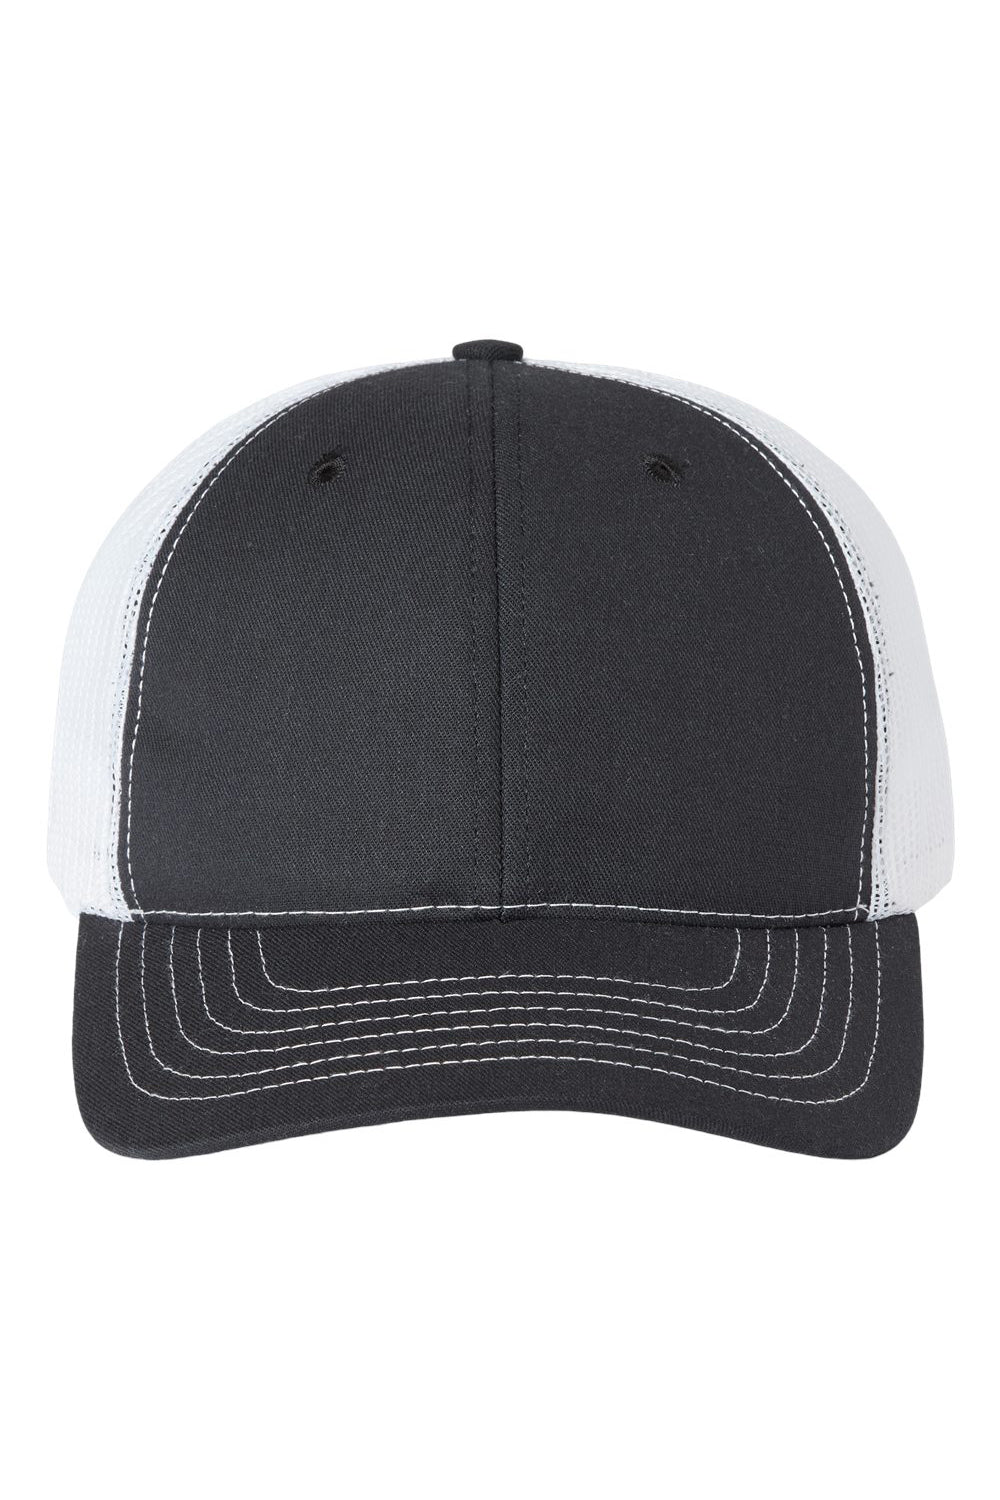 Classic Caps USA100 Mens USA Made Trucker Hat Black/White Flat Front